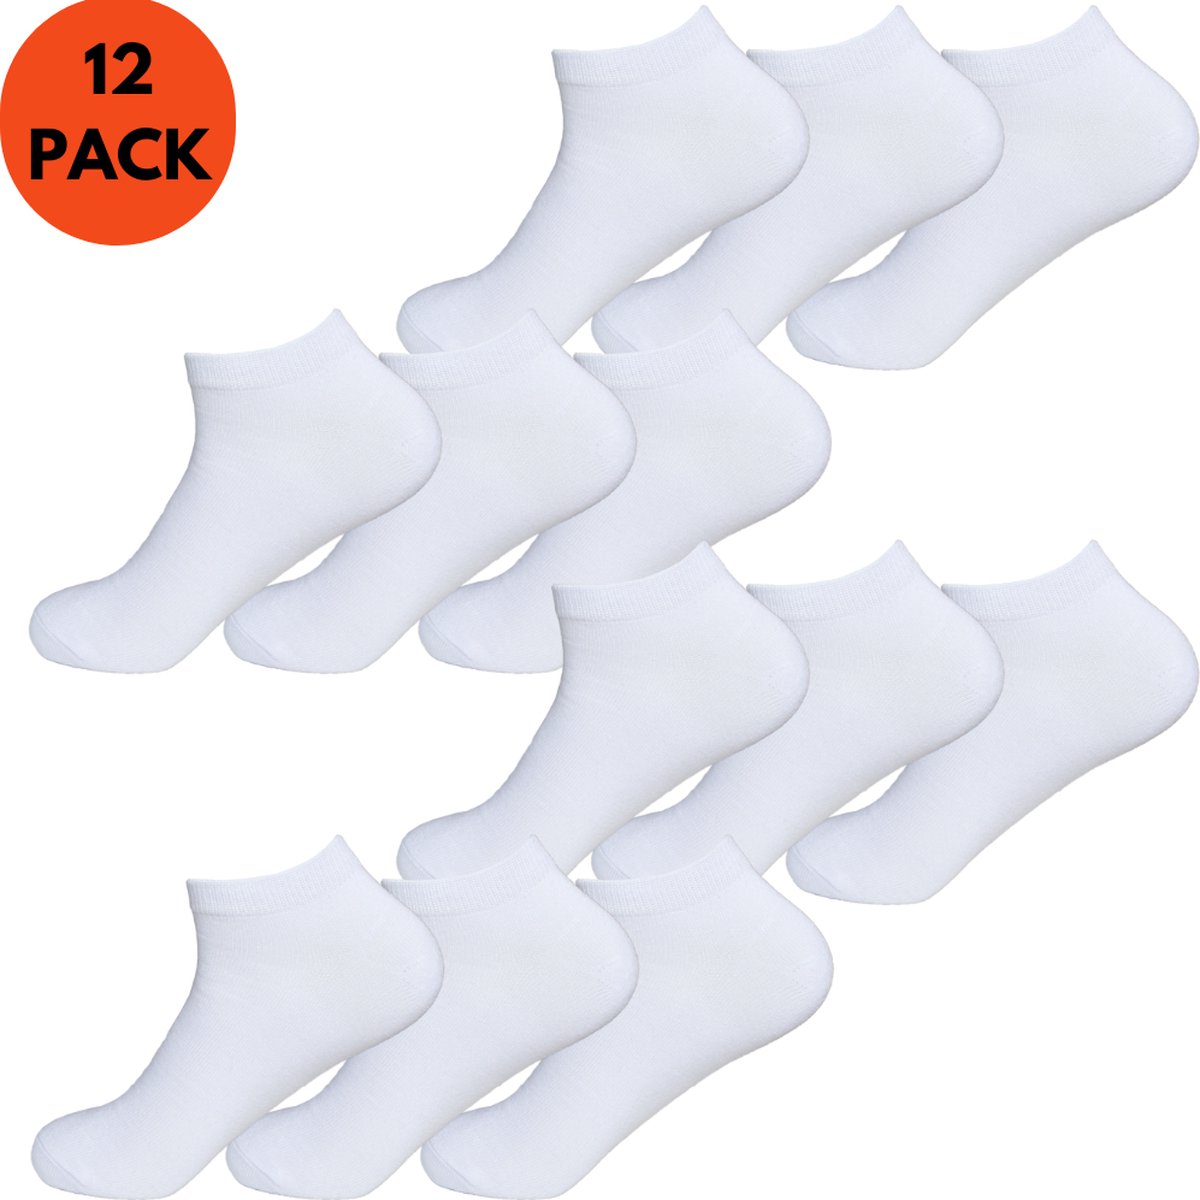 Enkelsokken Heren Dames | Katoen | Unisex | 12-Pack | Wit | Maat 41-46 | Korte Sokken | Enkelsokken Unisex - Merkloos